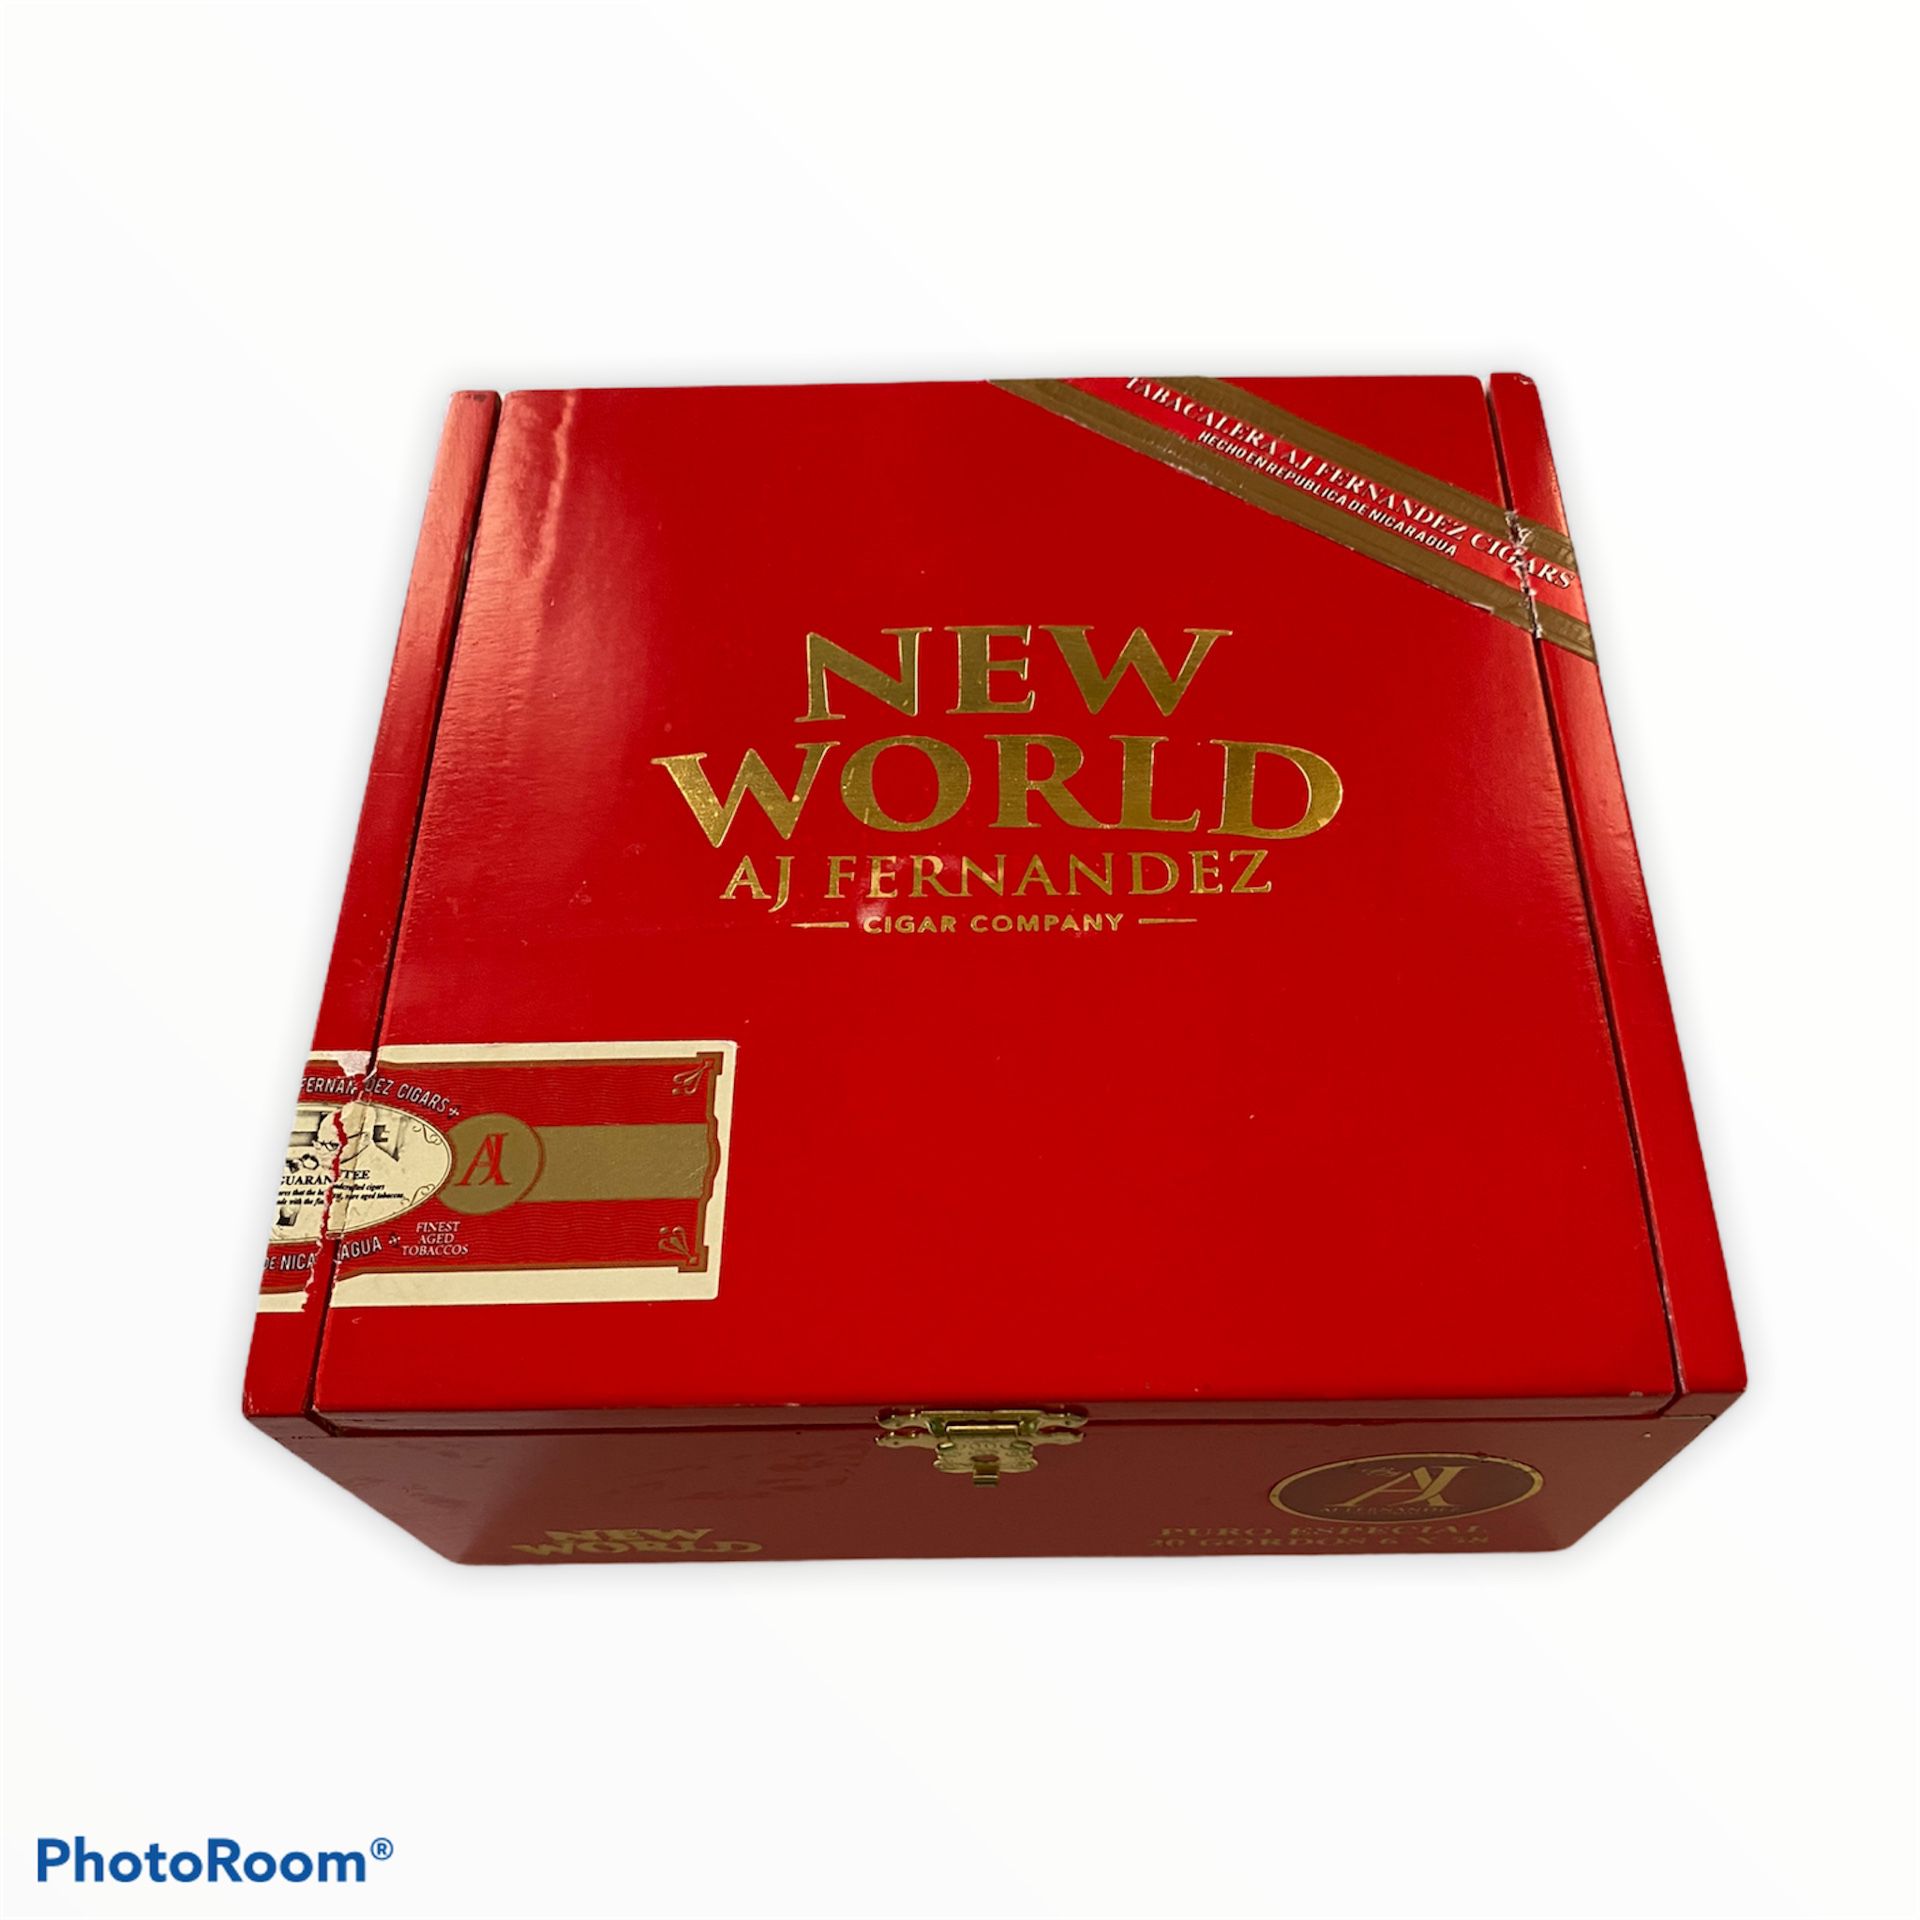 New World AJ Fernandez Cigar Company Box Red 